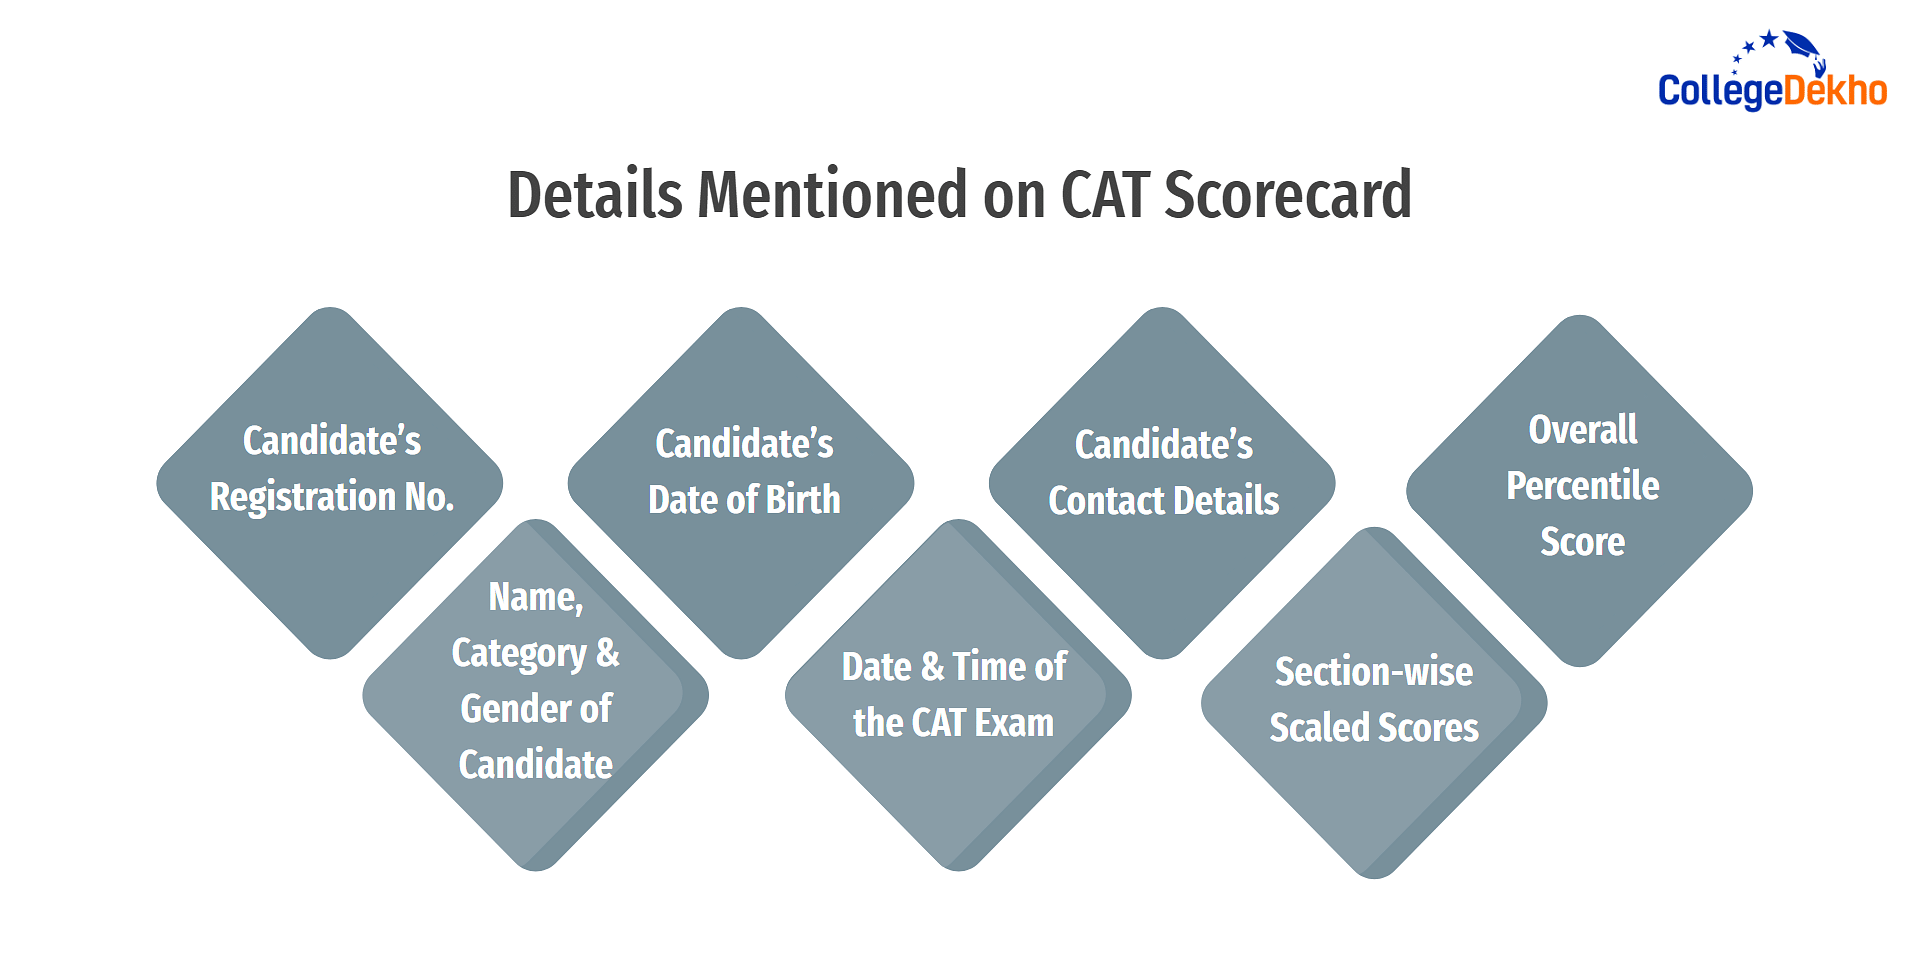 Details Mentioned on CAT Scorecard